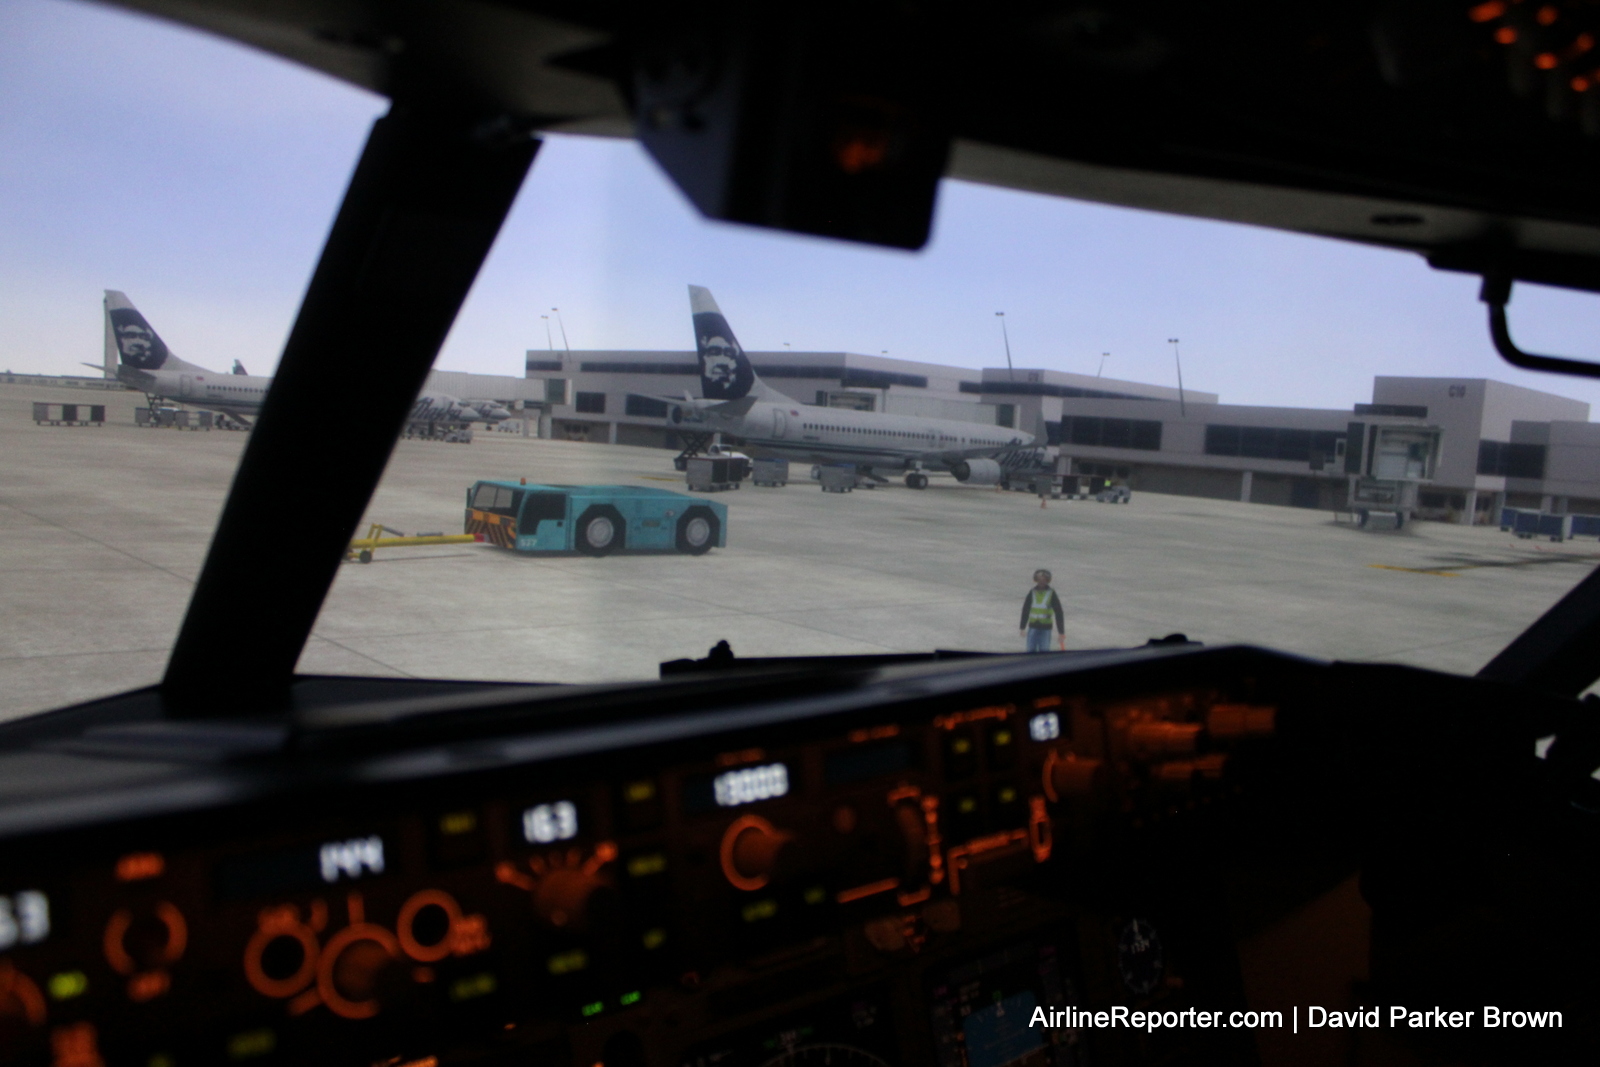 Alaska Airlines' newest Boeing 737 simulator